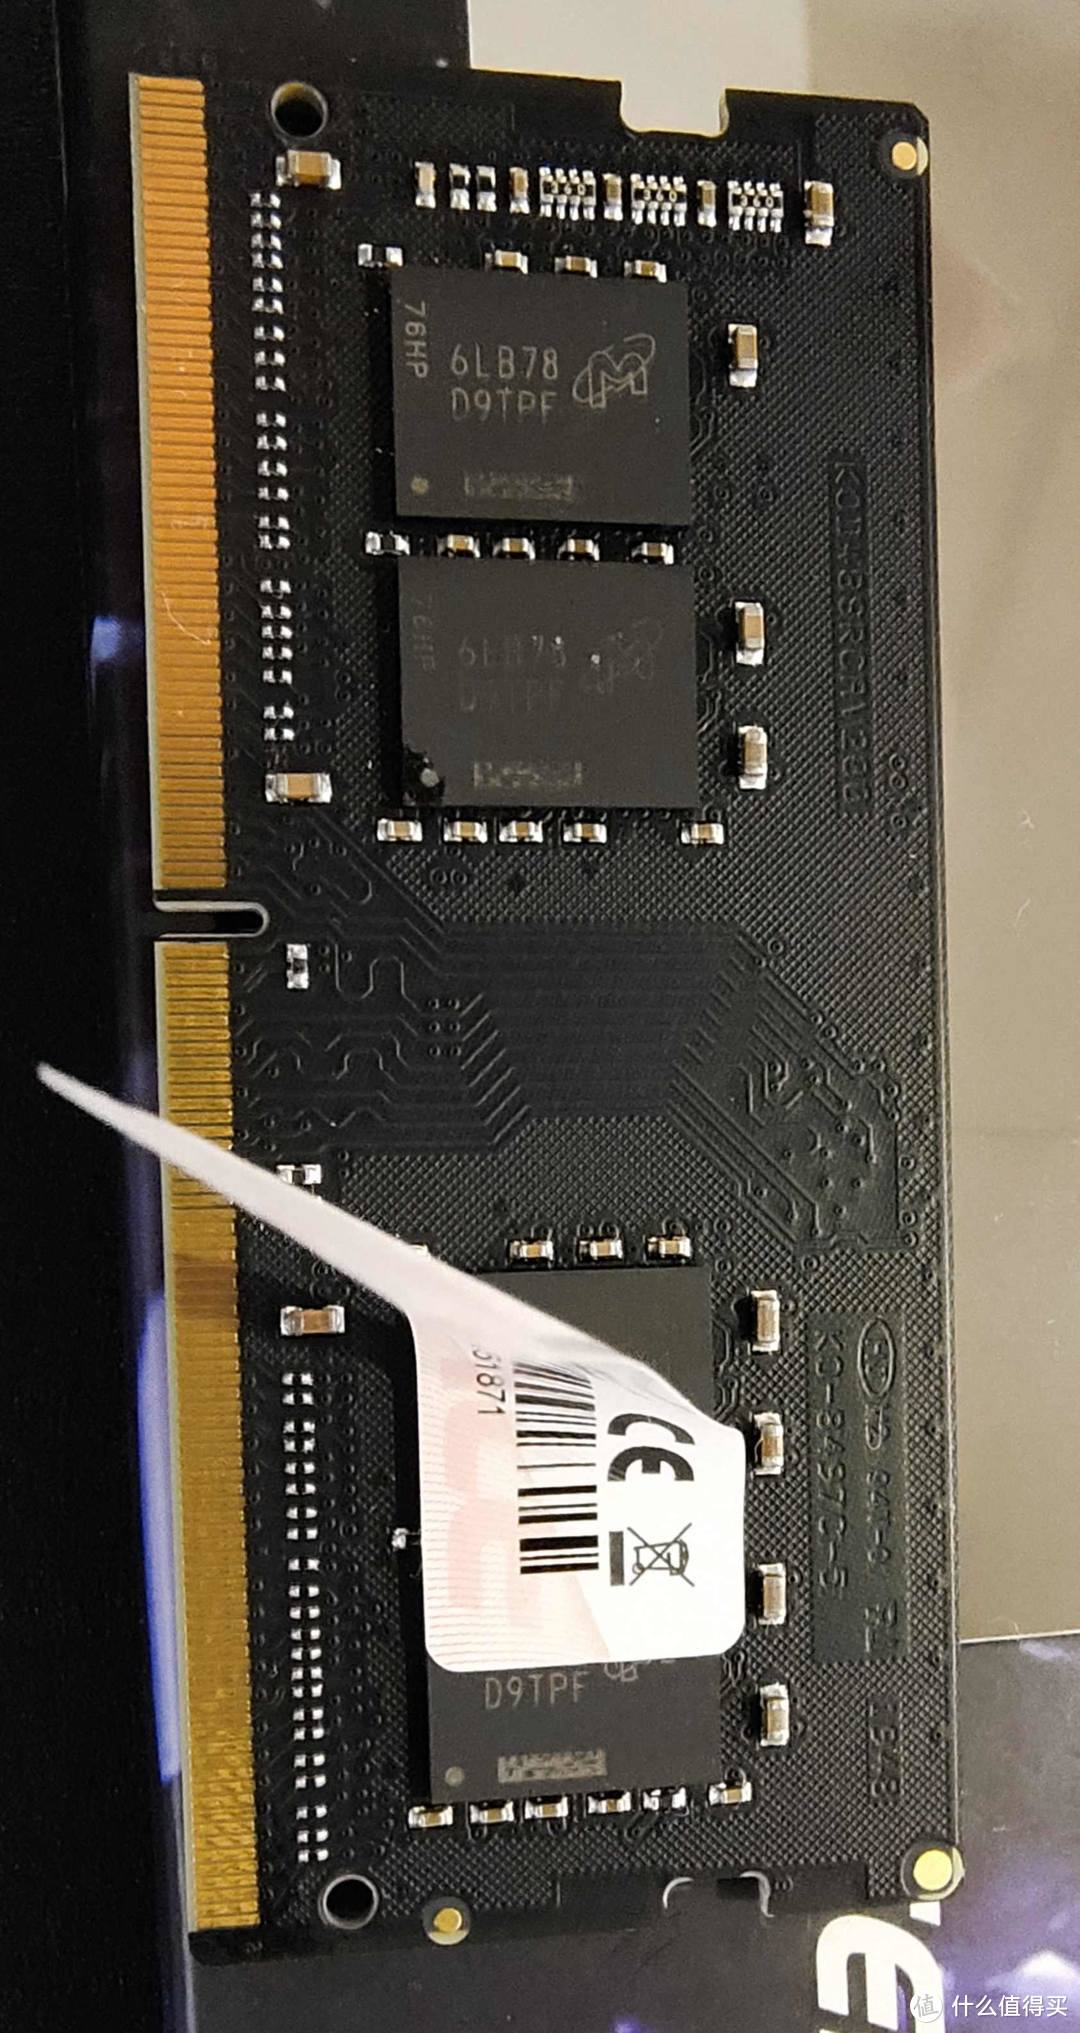 SEIWHALE 枭鲸 DDR4 2400/2666 16G笔记本内存